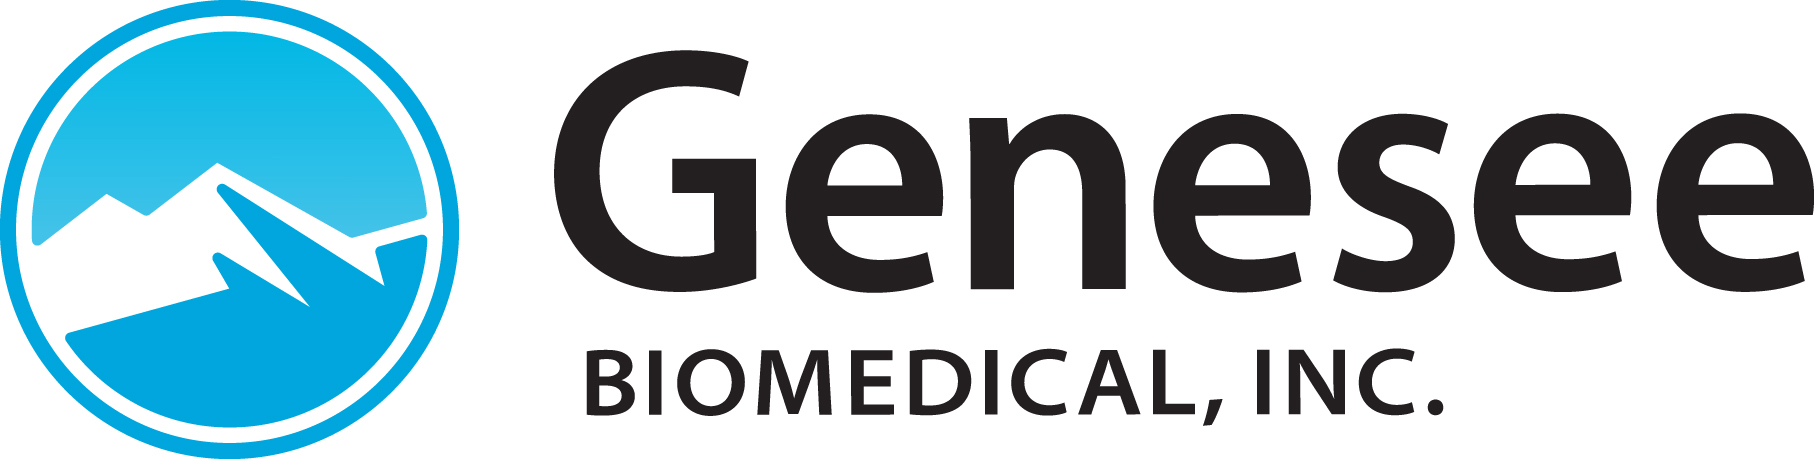 Genesee BioMedical Inc. |  Design Beyond Standard